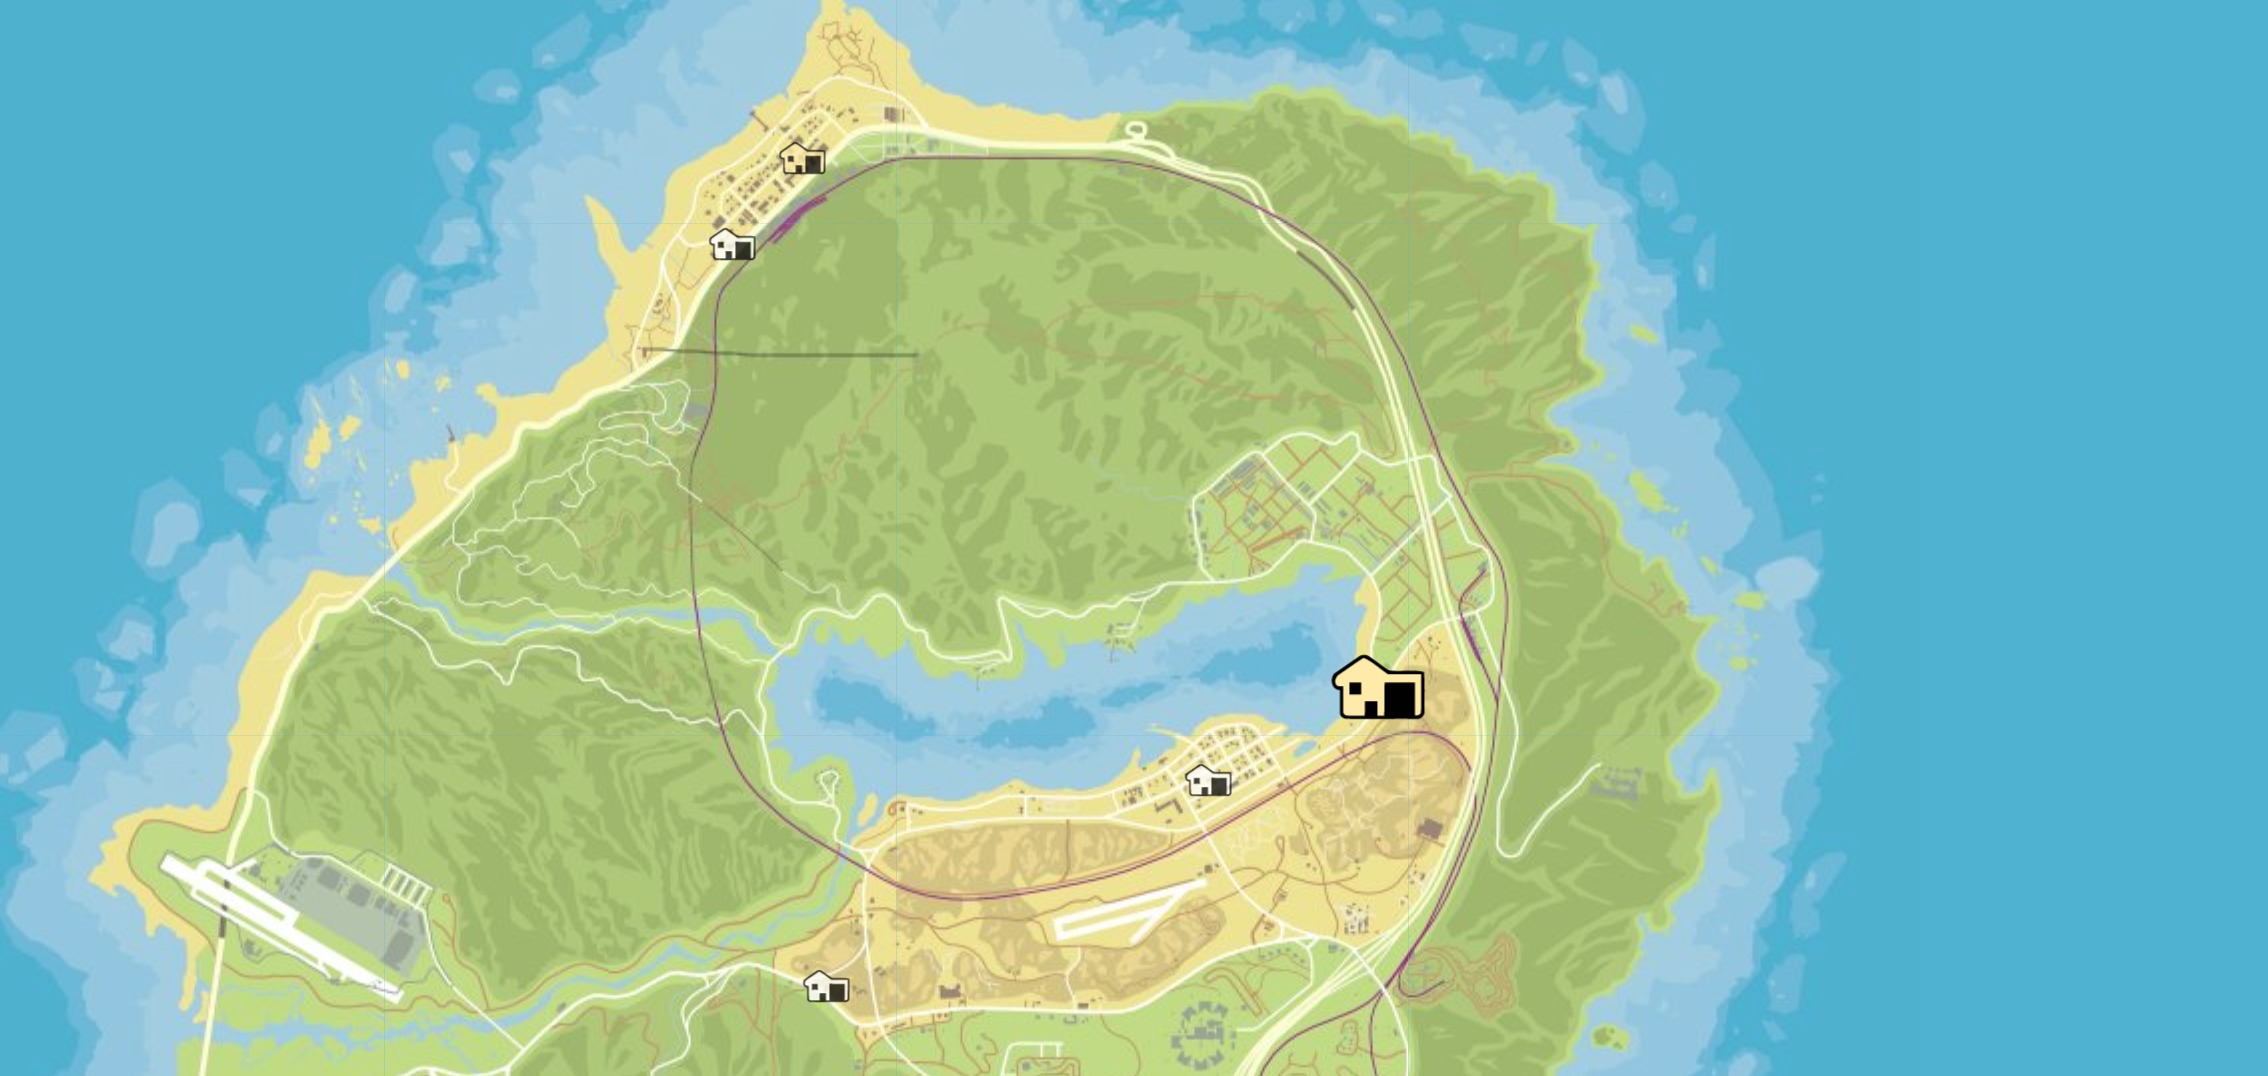 Weed Farm Locations in GTA Online 3